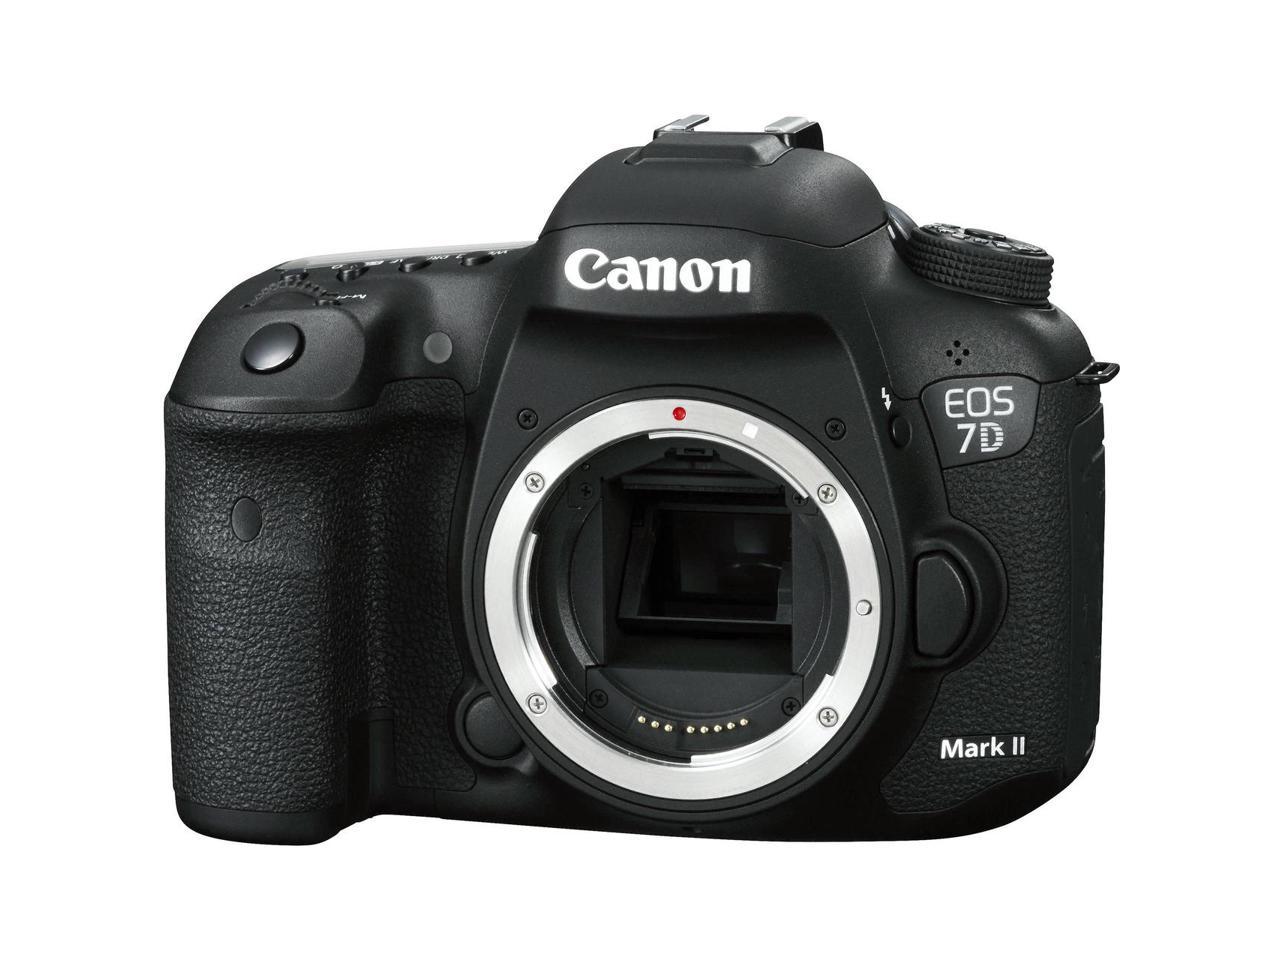 Canon EOS 7D Mark II DSLR Camera (Body Only) + 1 Year Warranty